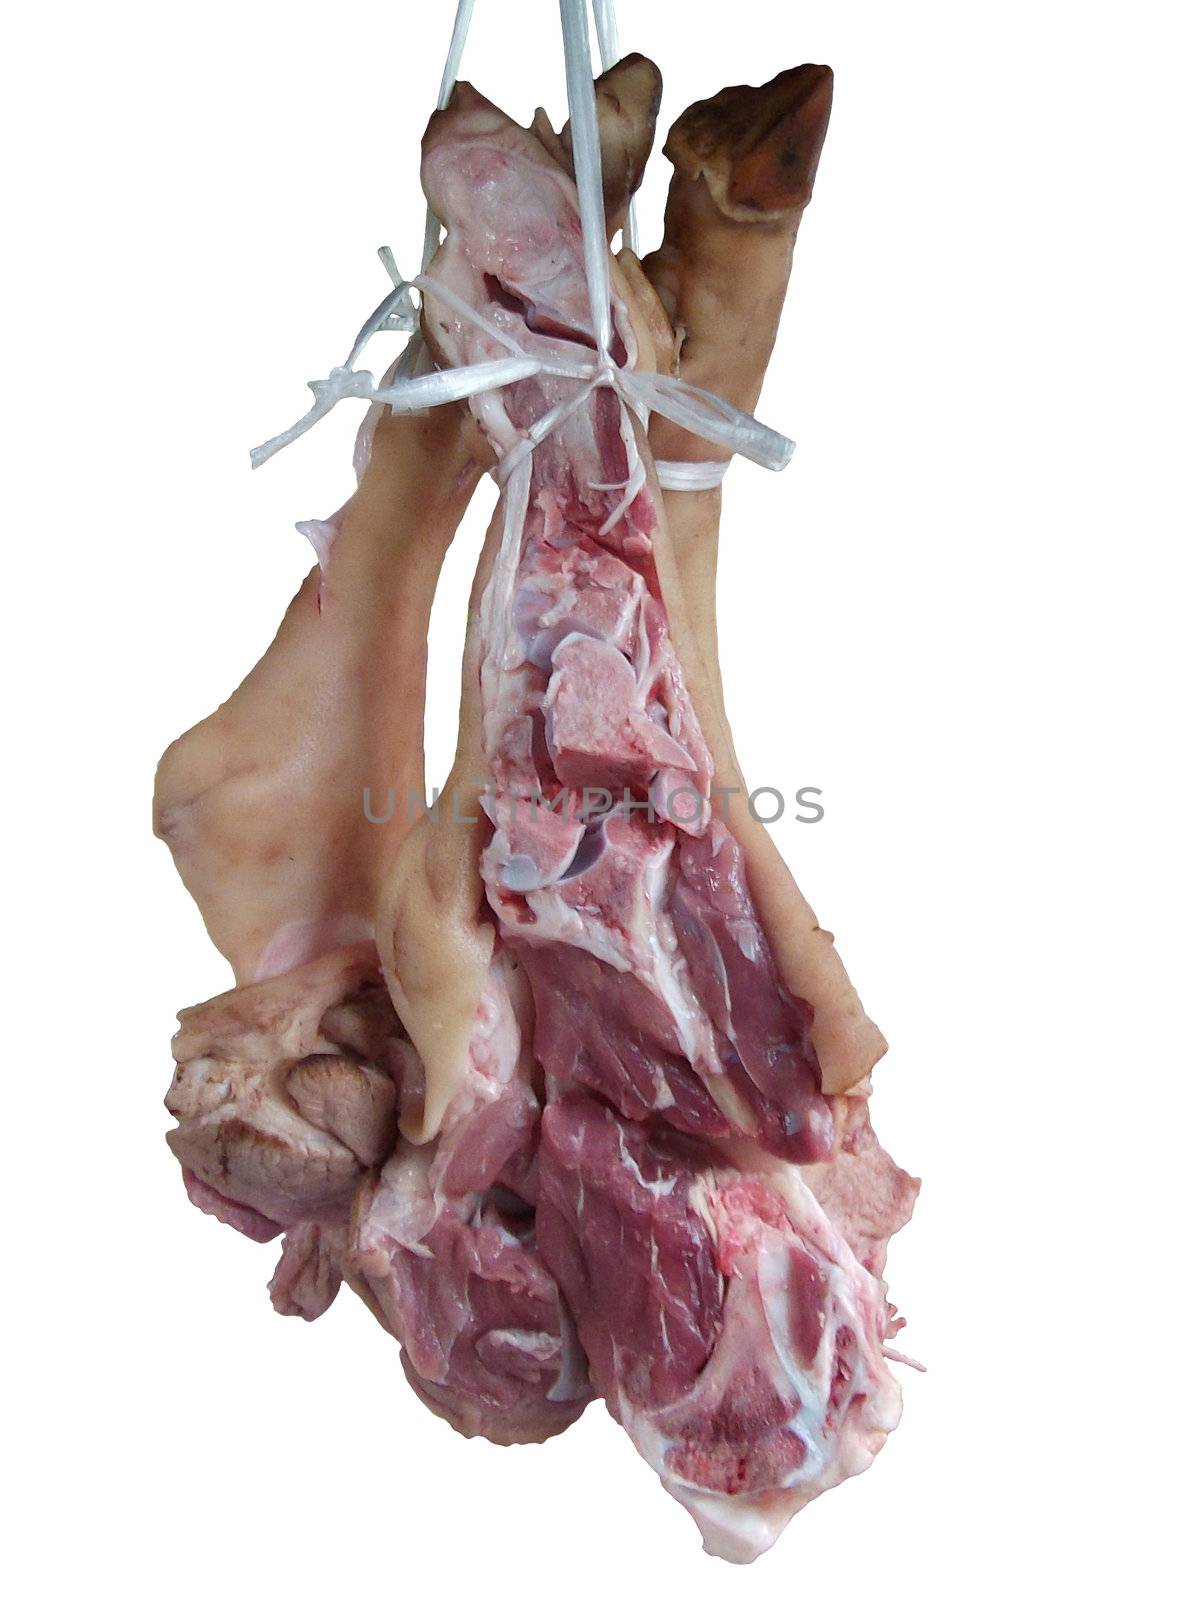 Legs of pork to hang at market